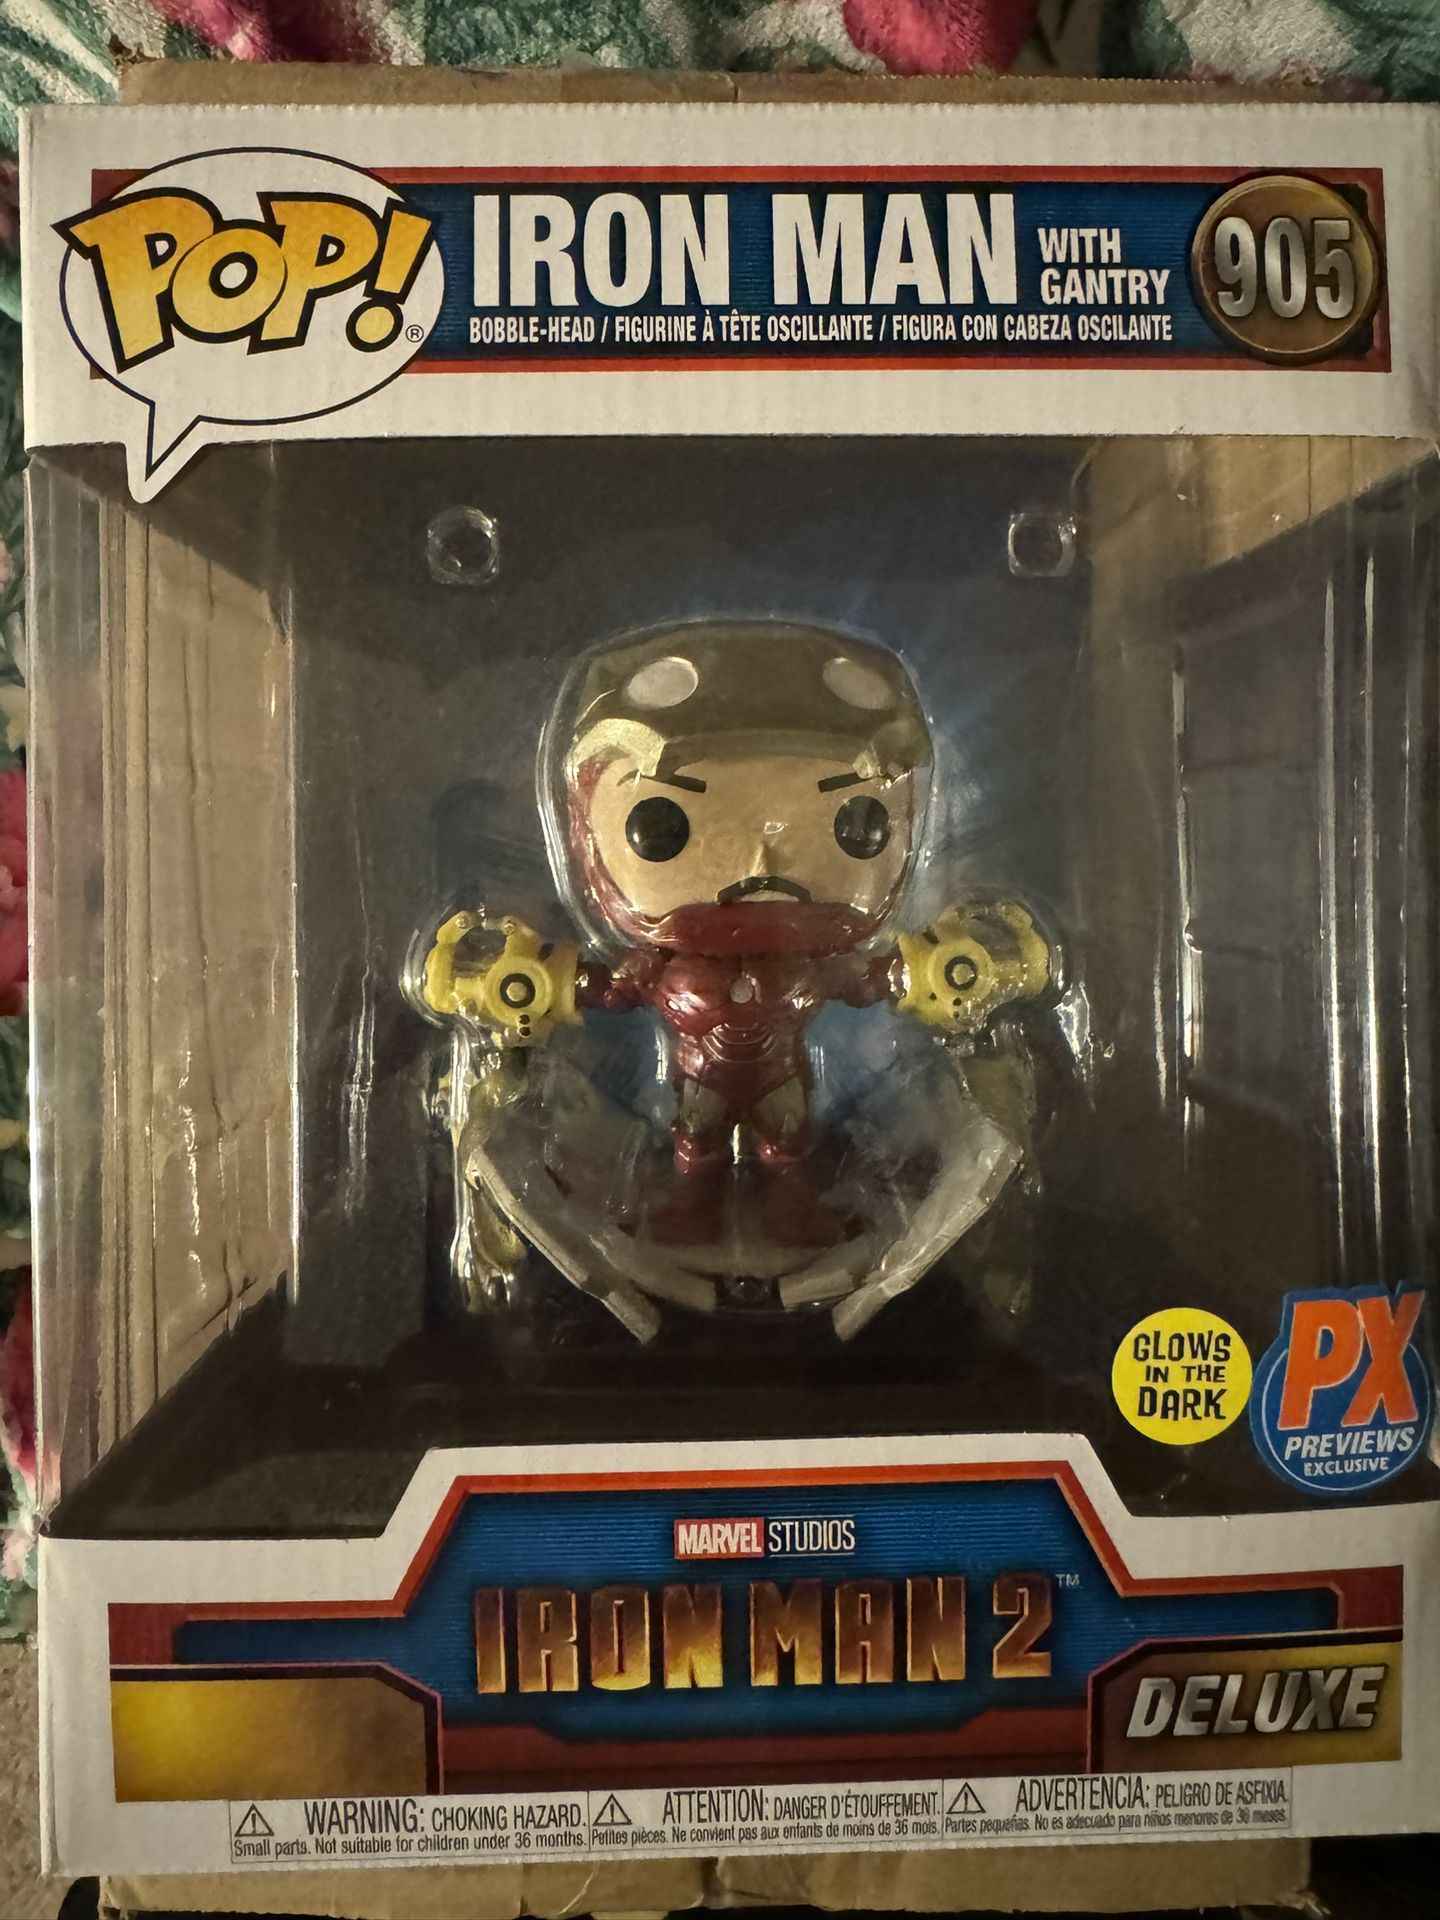 Iron Man with Gantry Glow in the Dark Funko